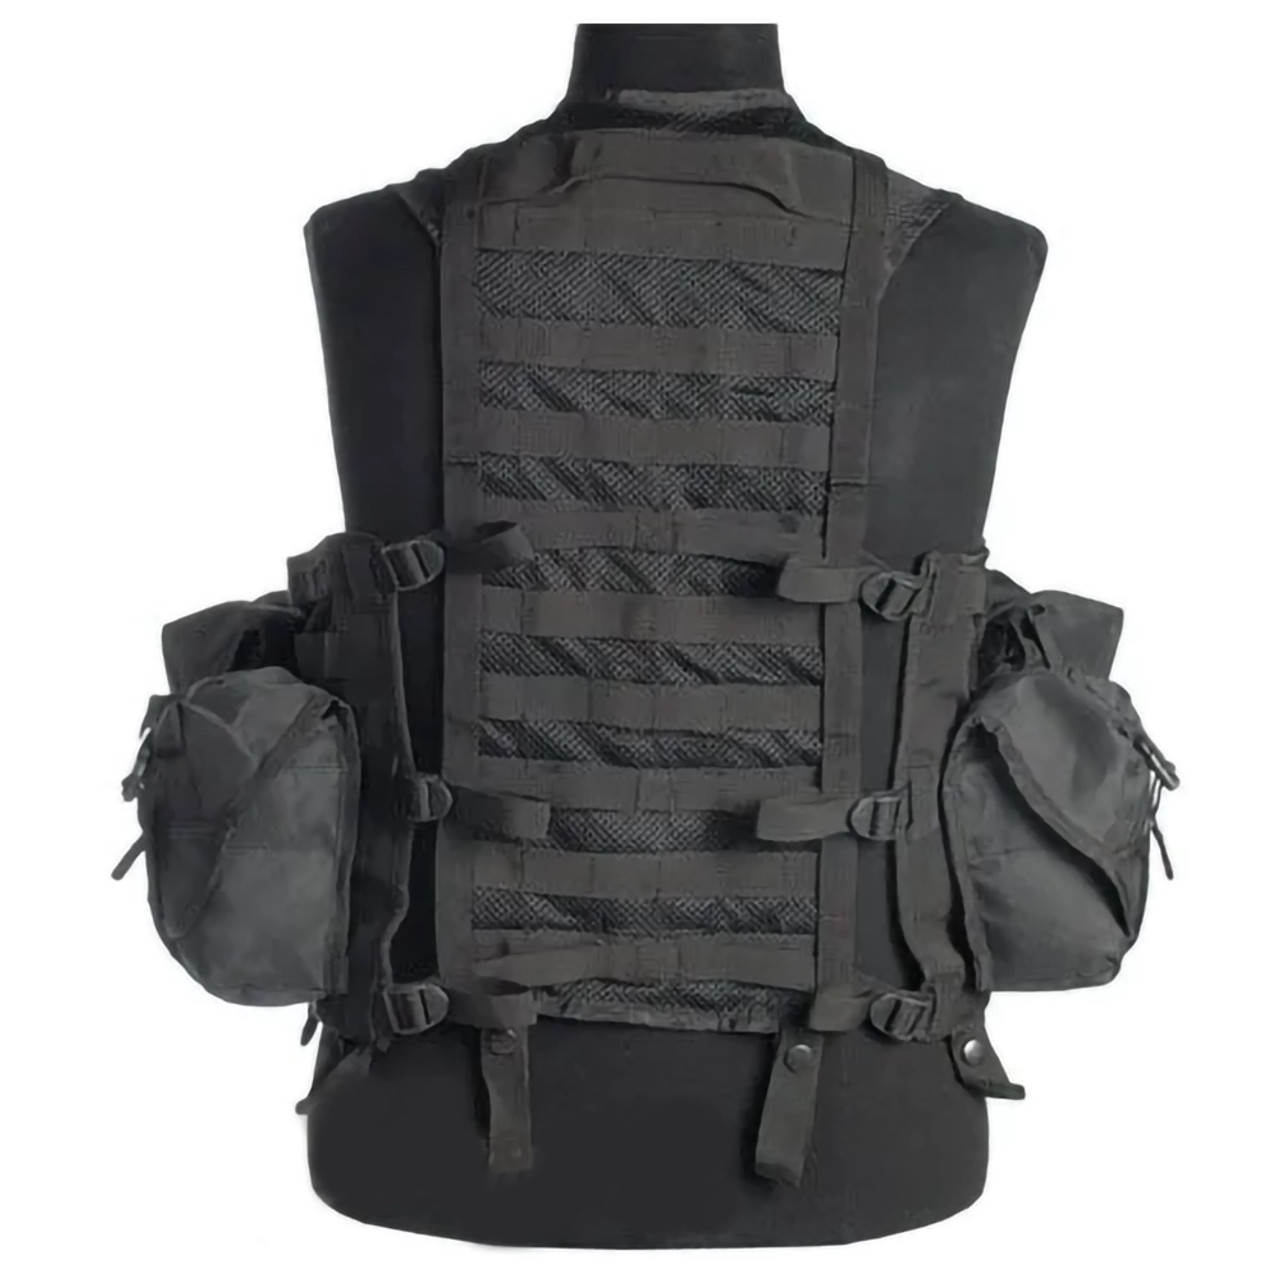 MIL-TEC Tactical Vest Modular System - Black